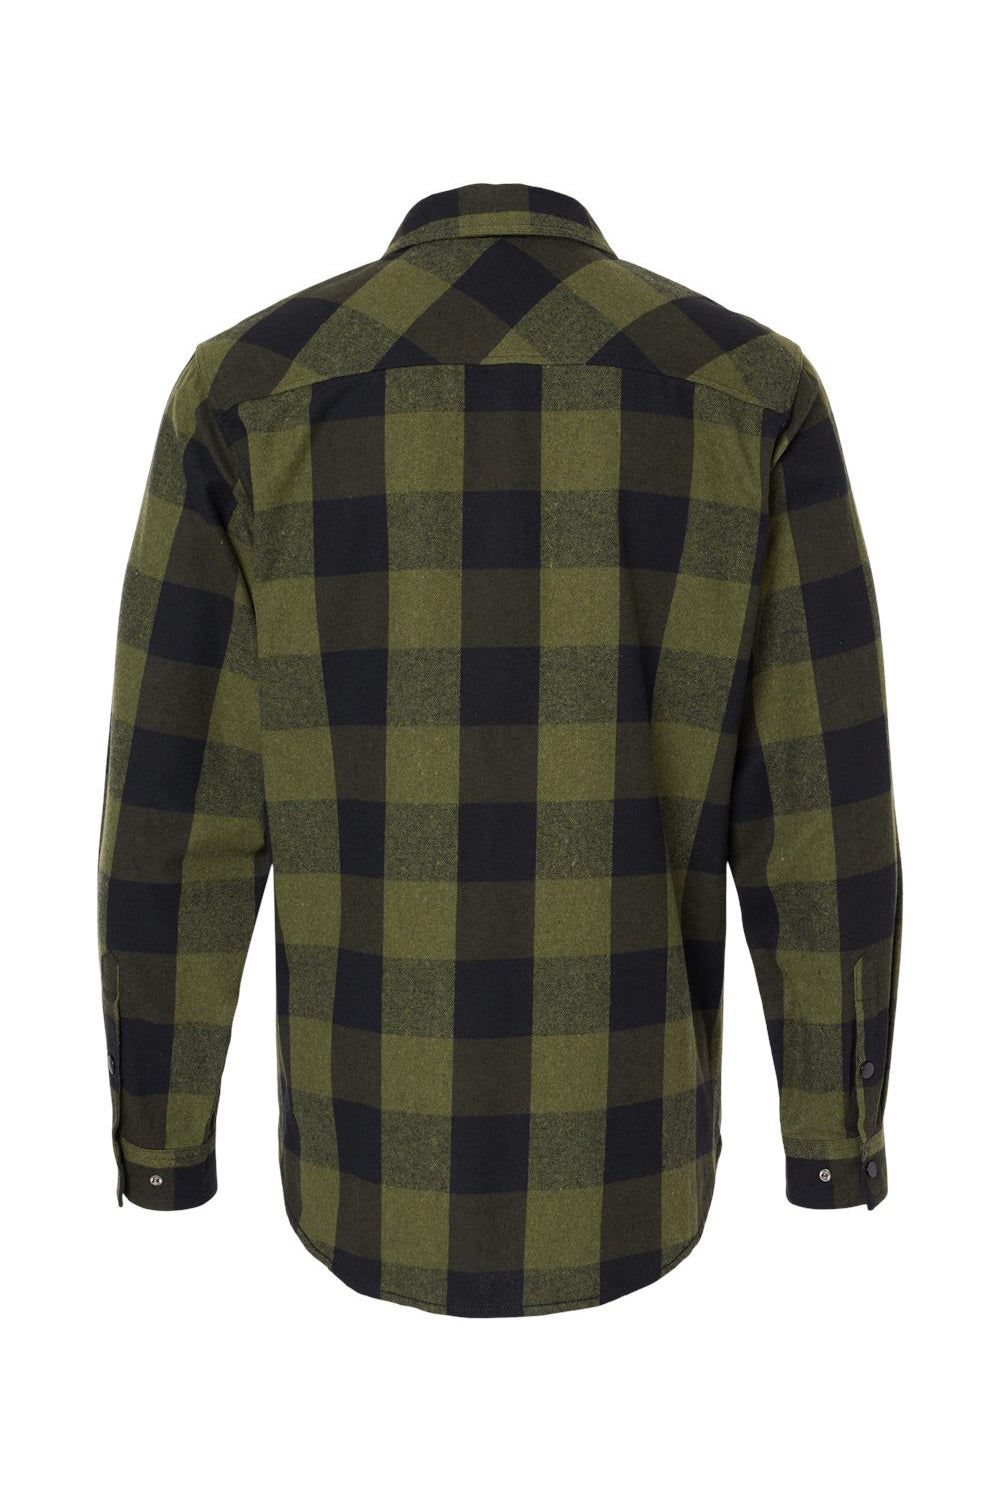 Burnside 8219 Mens Plaid Flannel Long Sleeve Snap Down Shirt w/ Double Pockets Army Green/Black Flat Back